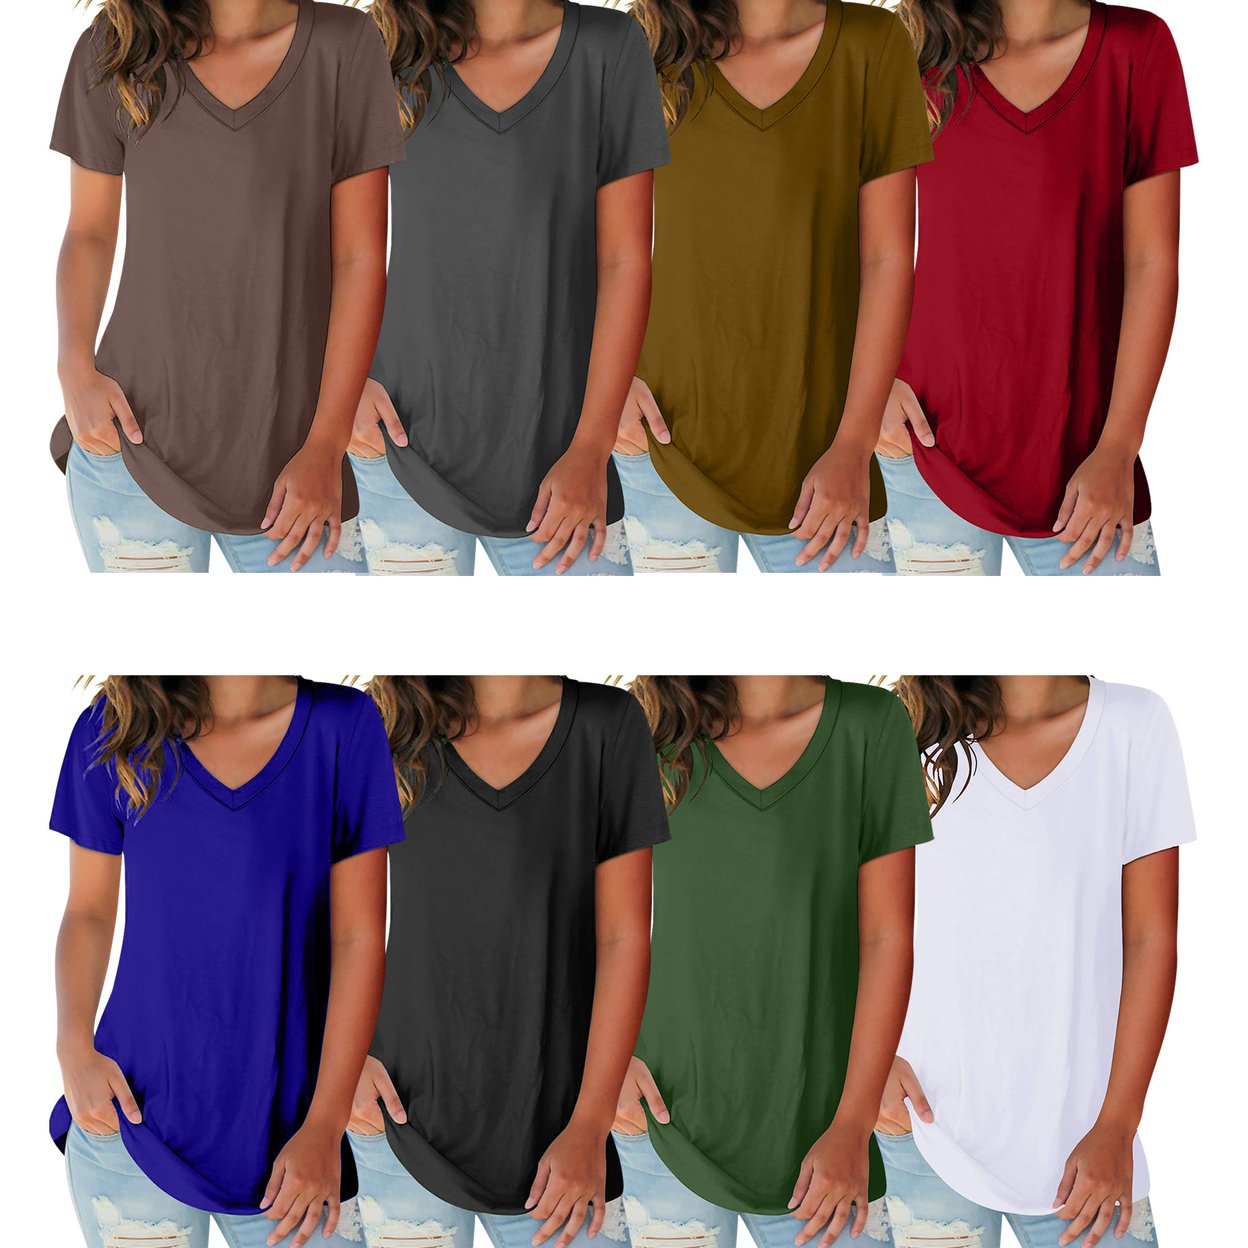 2-Pack: Women's Ultra Soft Smooth Cotton Blend Basic V-Neck Short Sleeve Shirts - White & Green, X-large